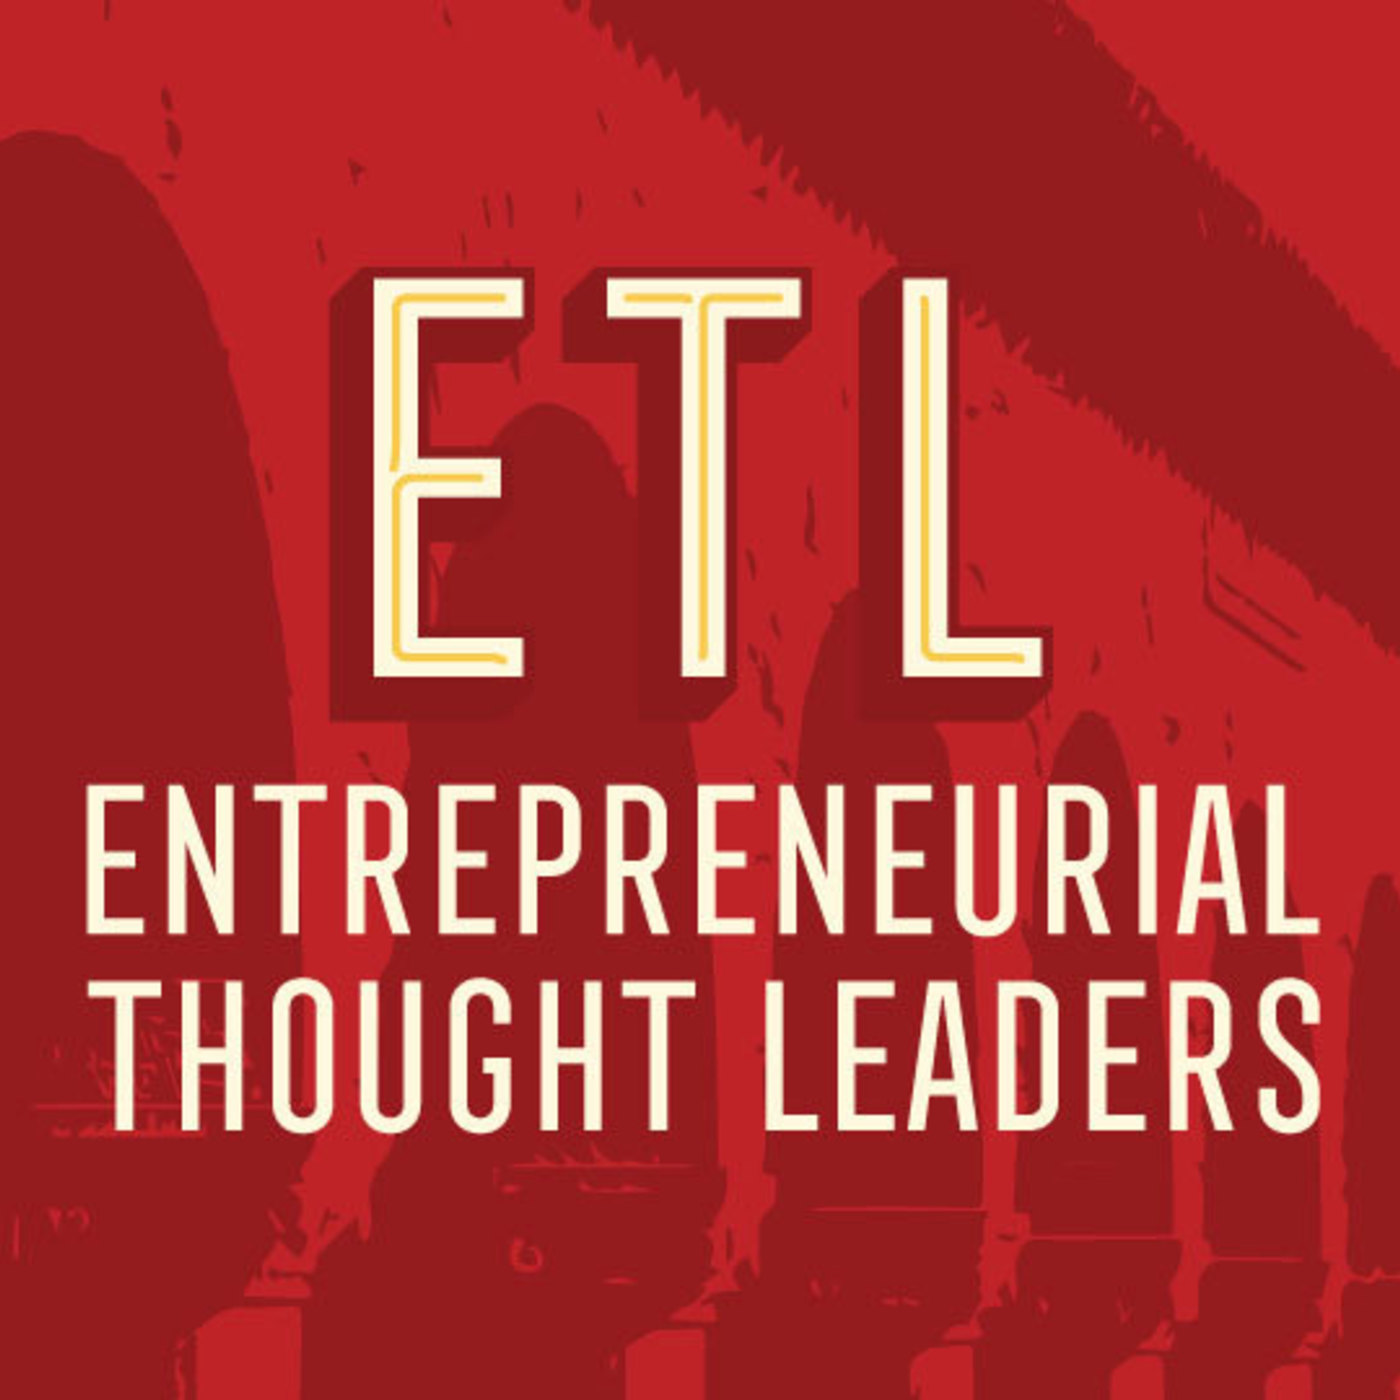 Marc Tessier-Lavigne (Stanford University) - Elements of Effective Leadership